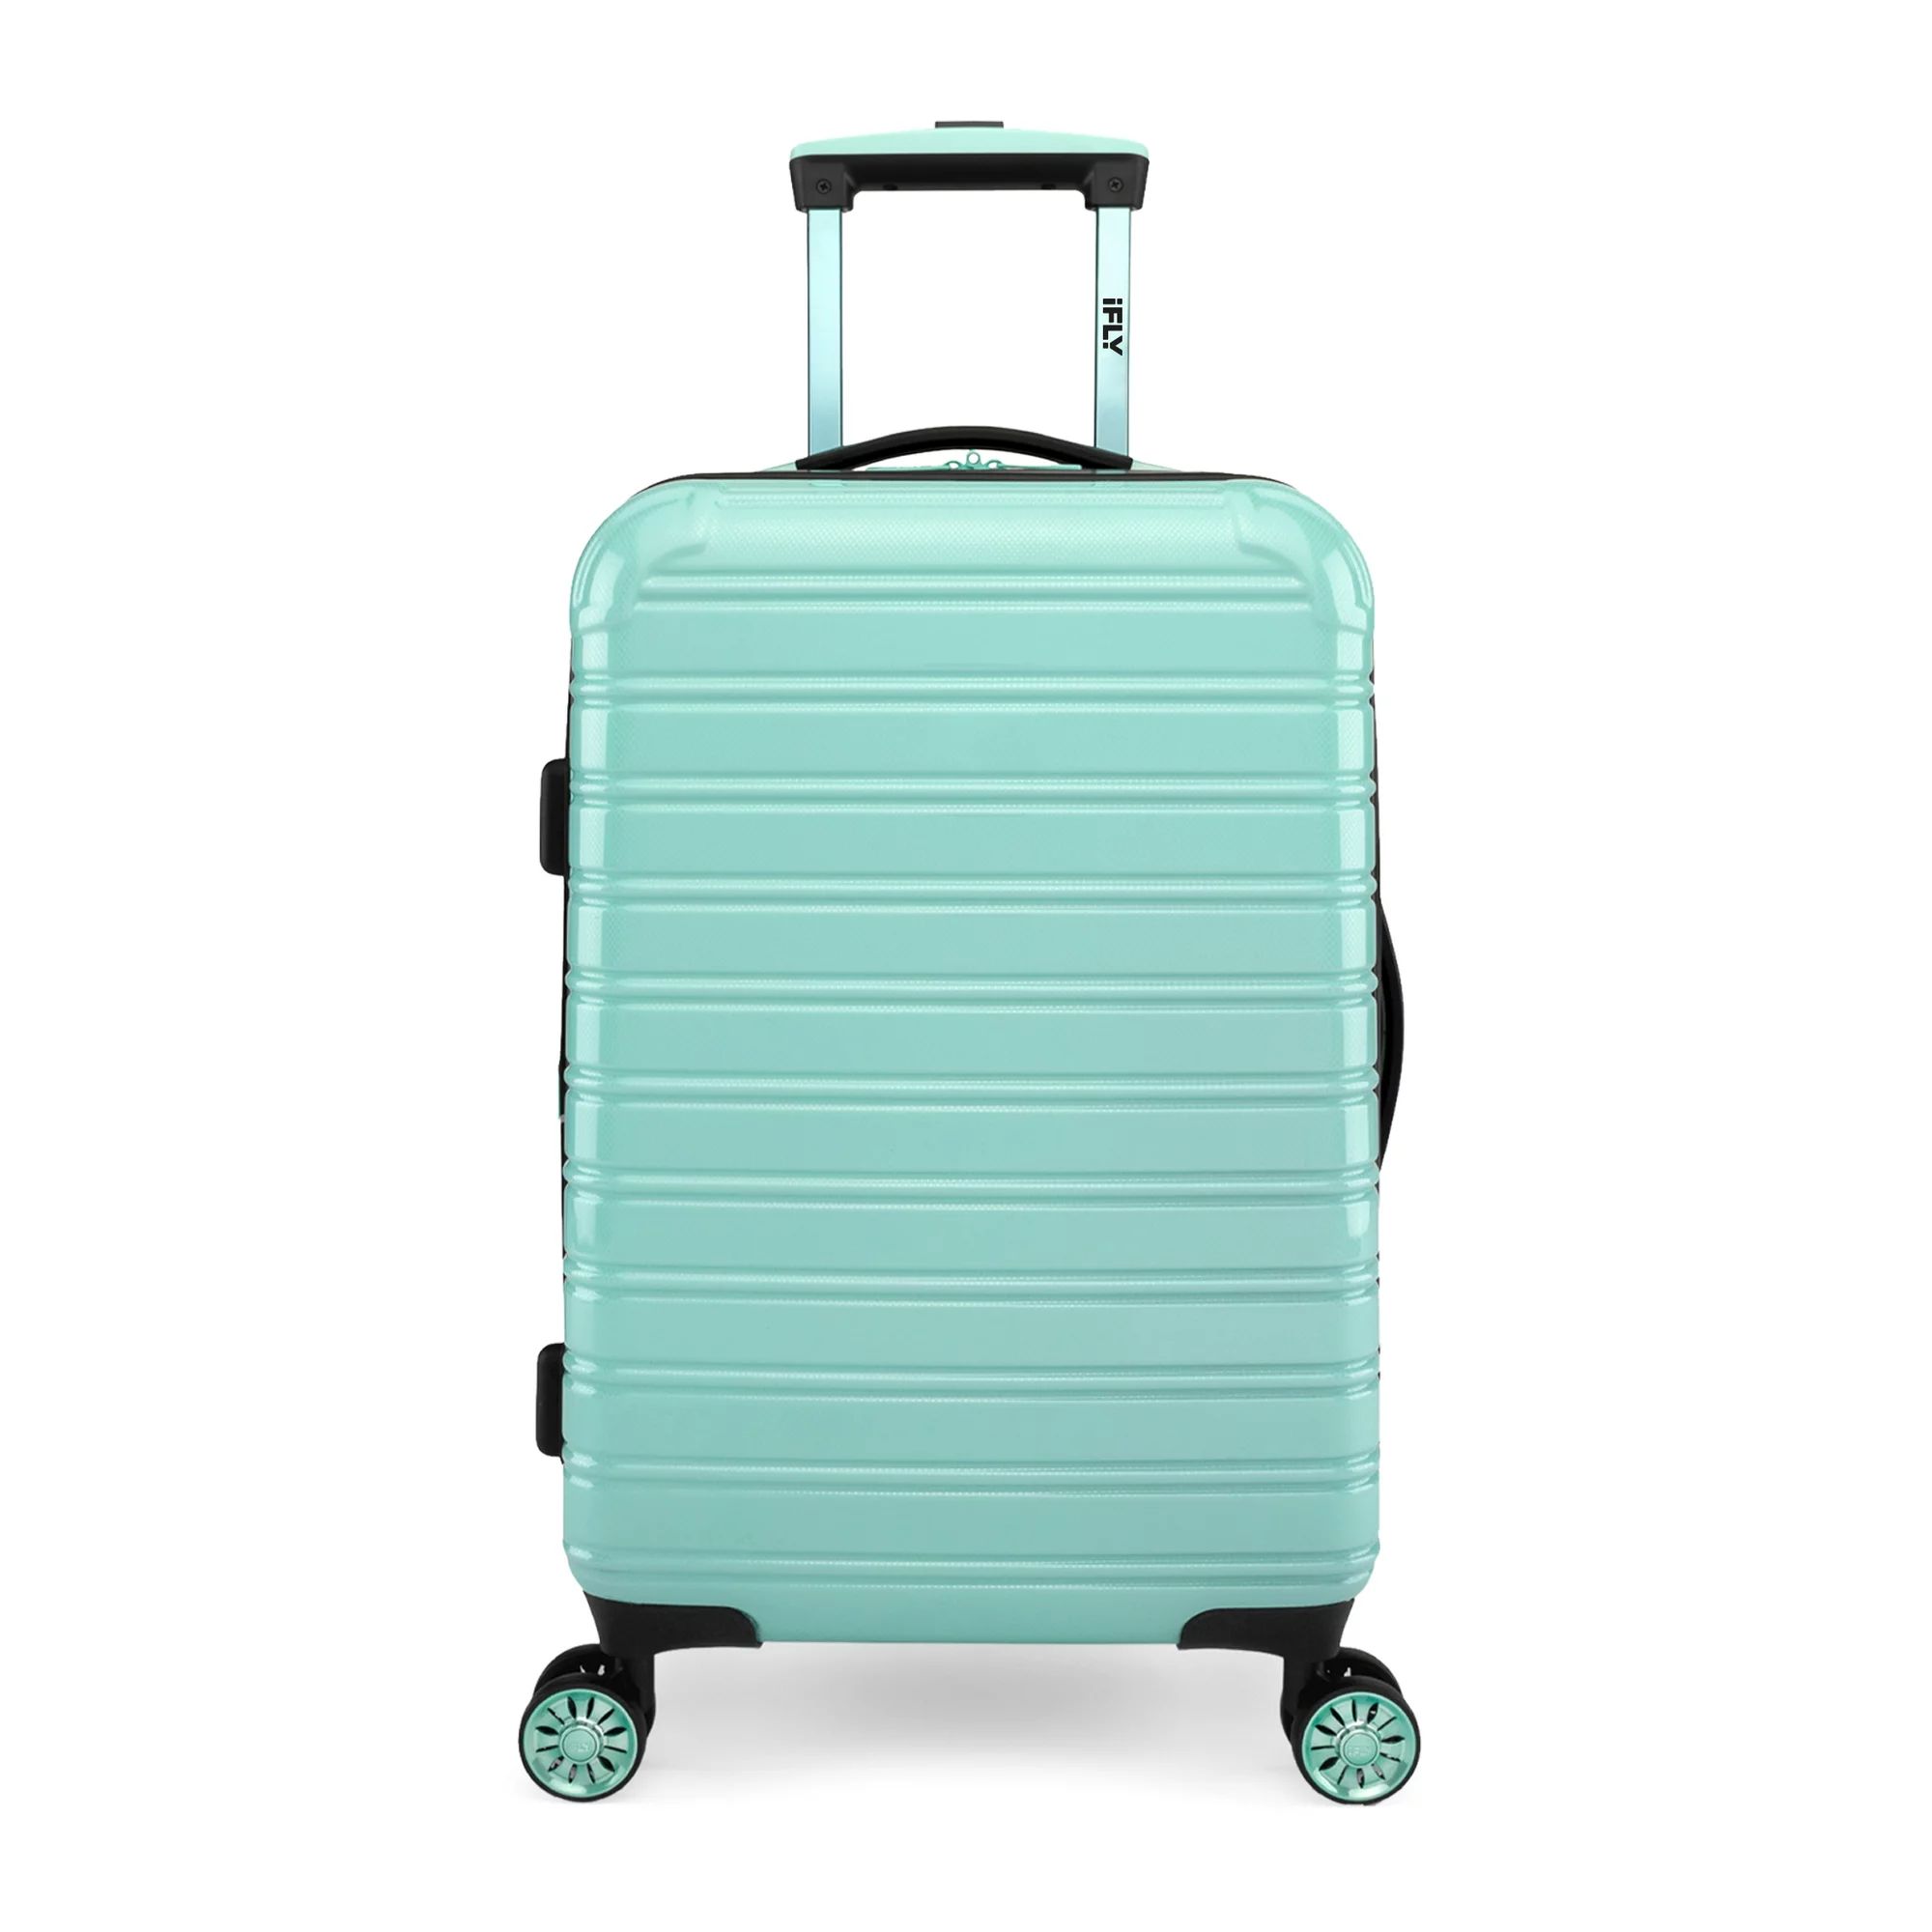 iFLY Hardside Fibertech Luggage 20" Carry-on Luggage, Mint | Walmart (US)